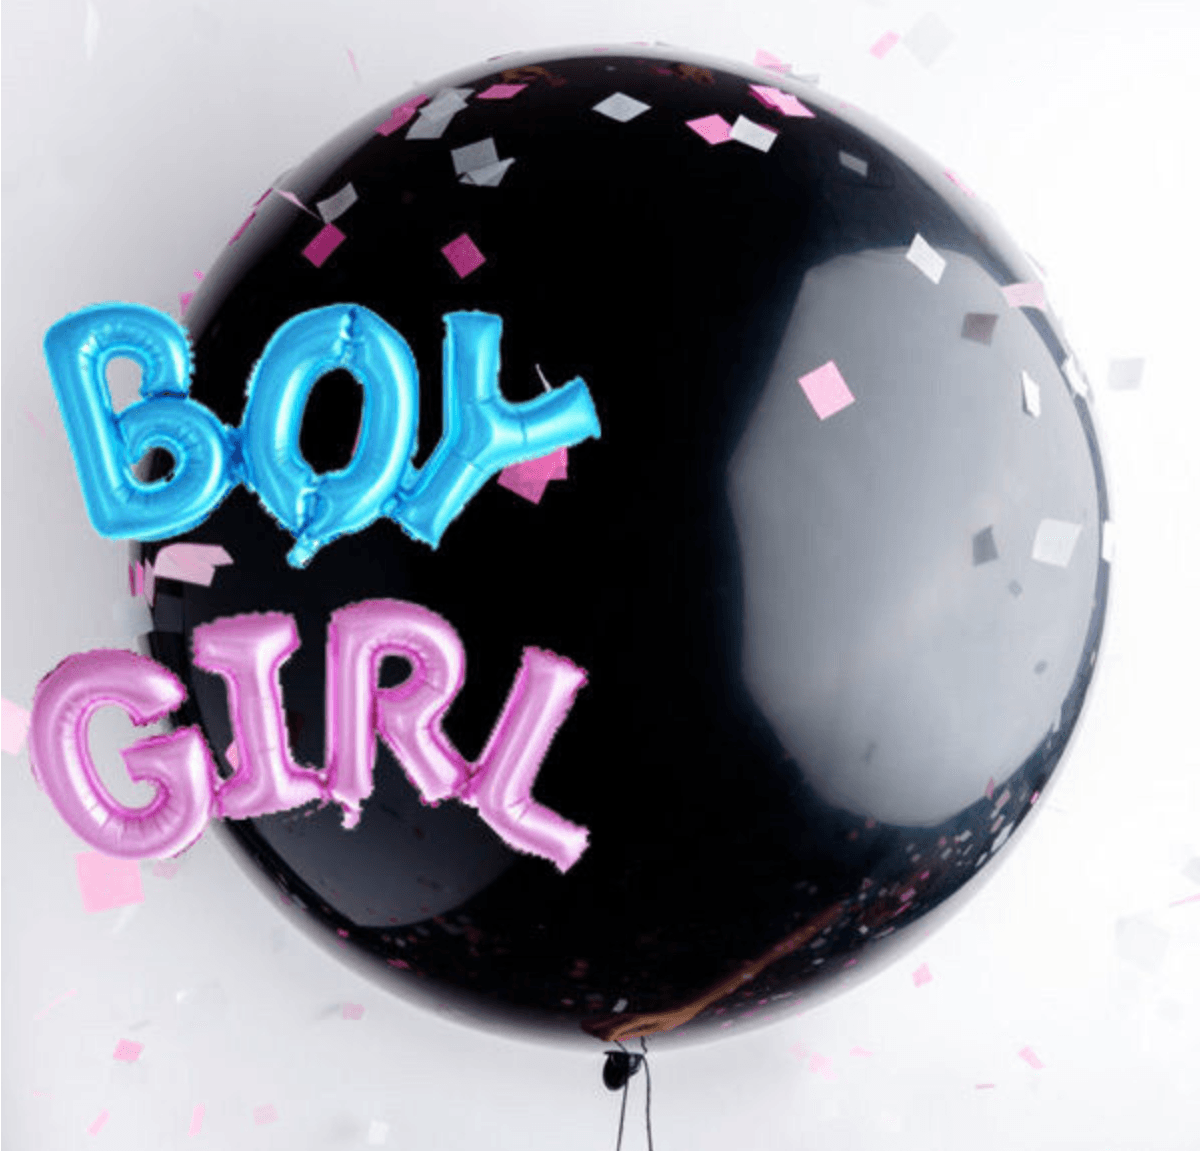 Boy or girl, gender reveal party